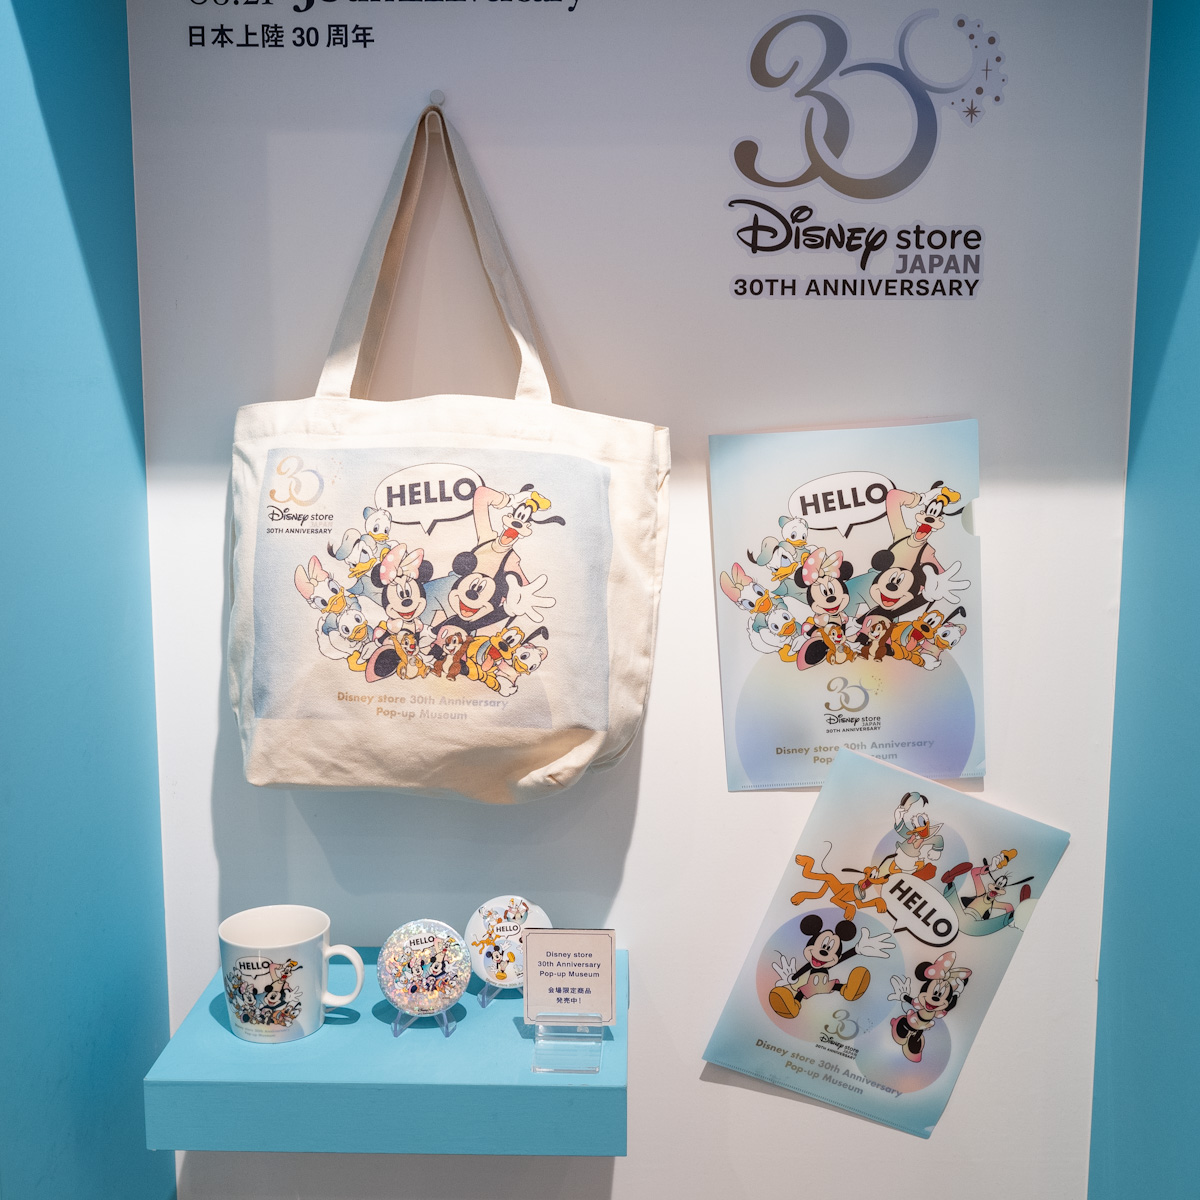 「Disney store 30th Anniversary Pop-up Museum」限定グッズ